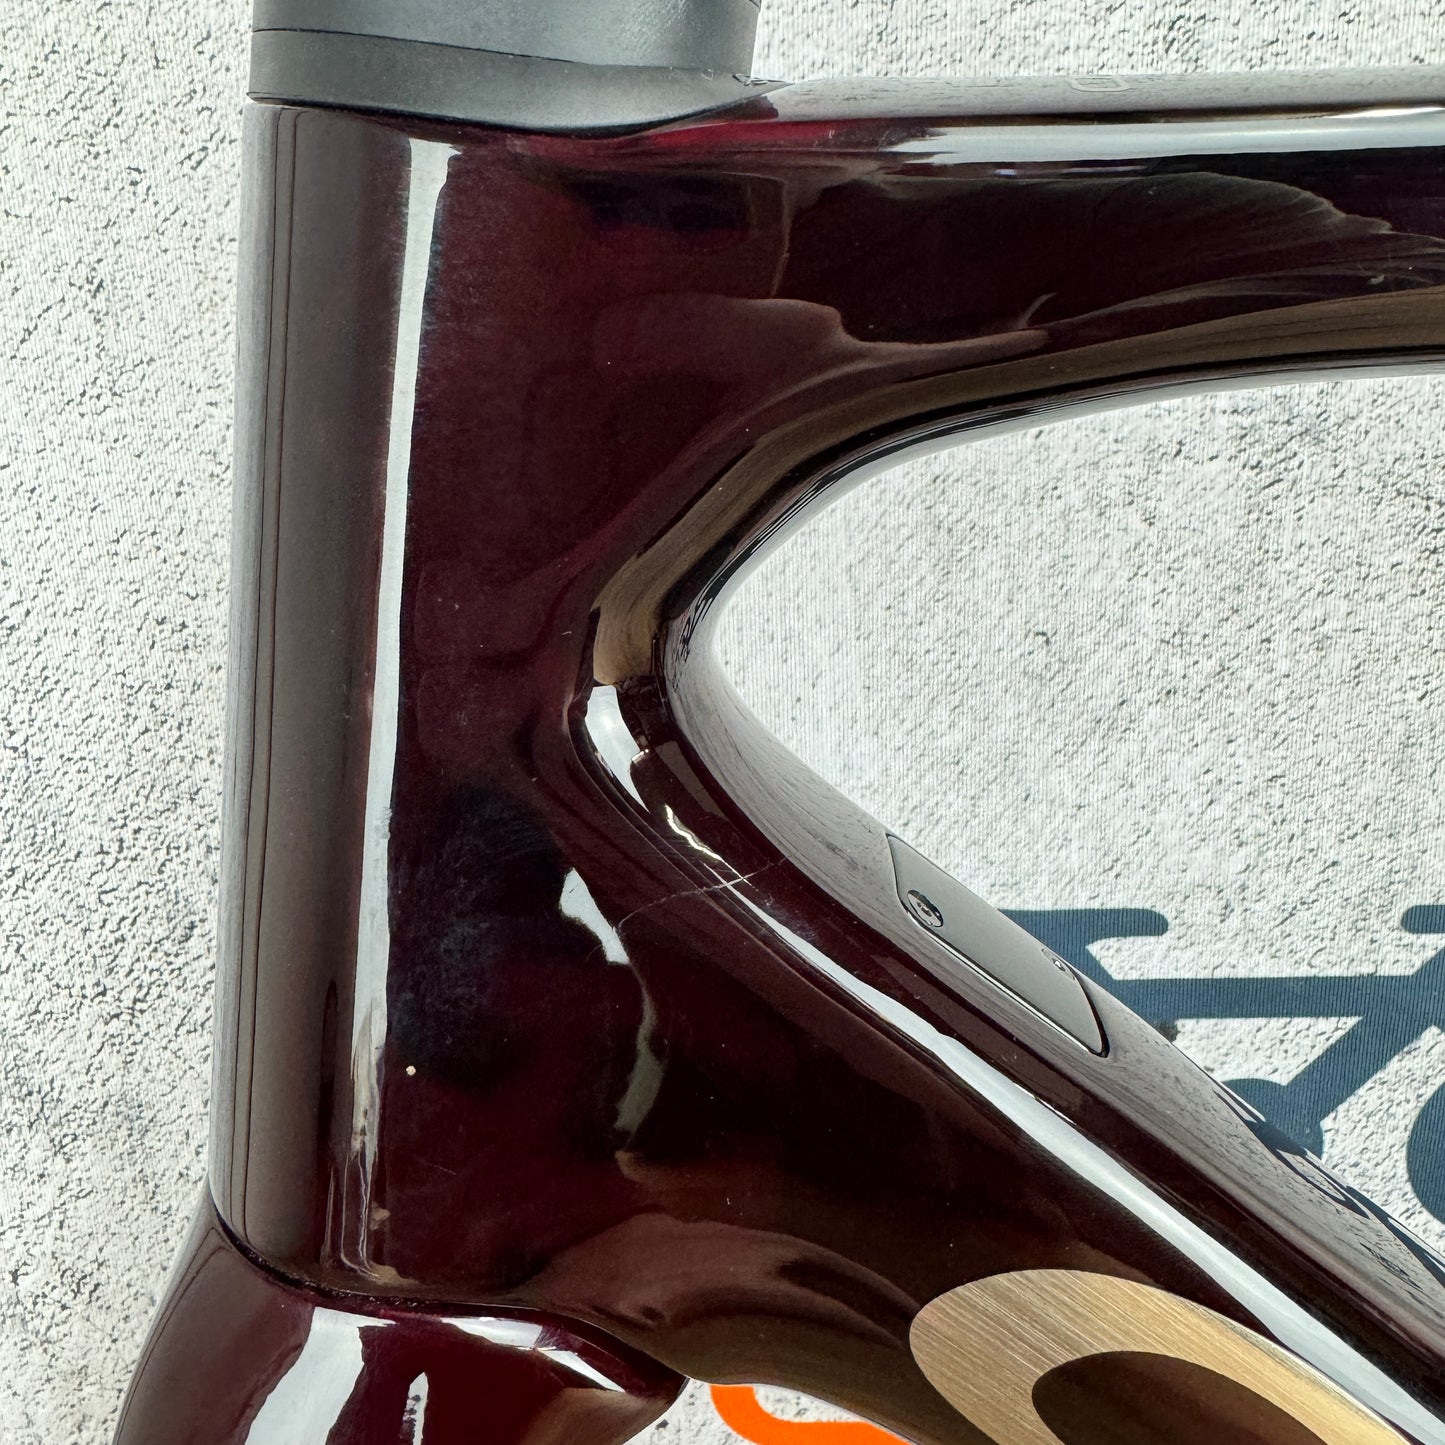 2023 Orbea Orca M20 OMX Size 53 (55cm) Red Wine Road Bike Frameset 700c 1780g